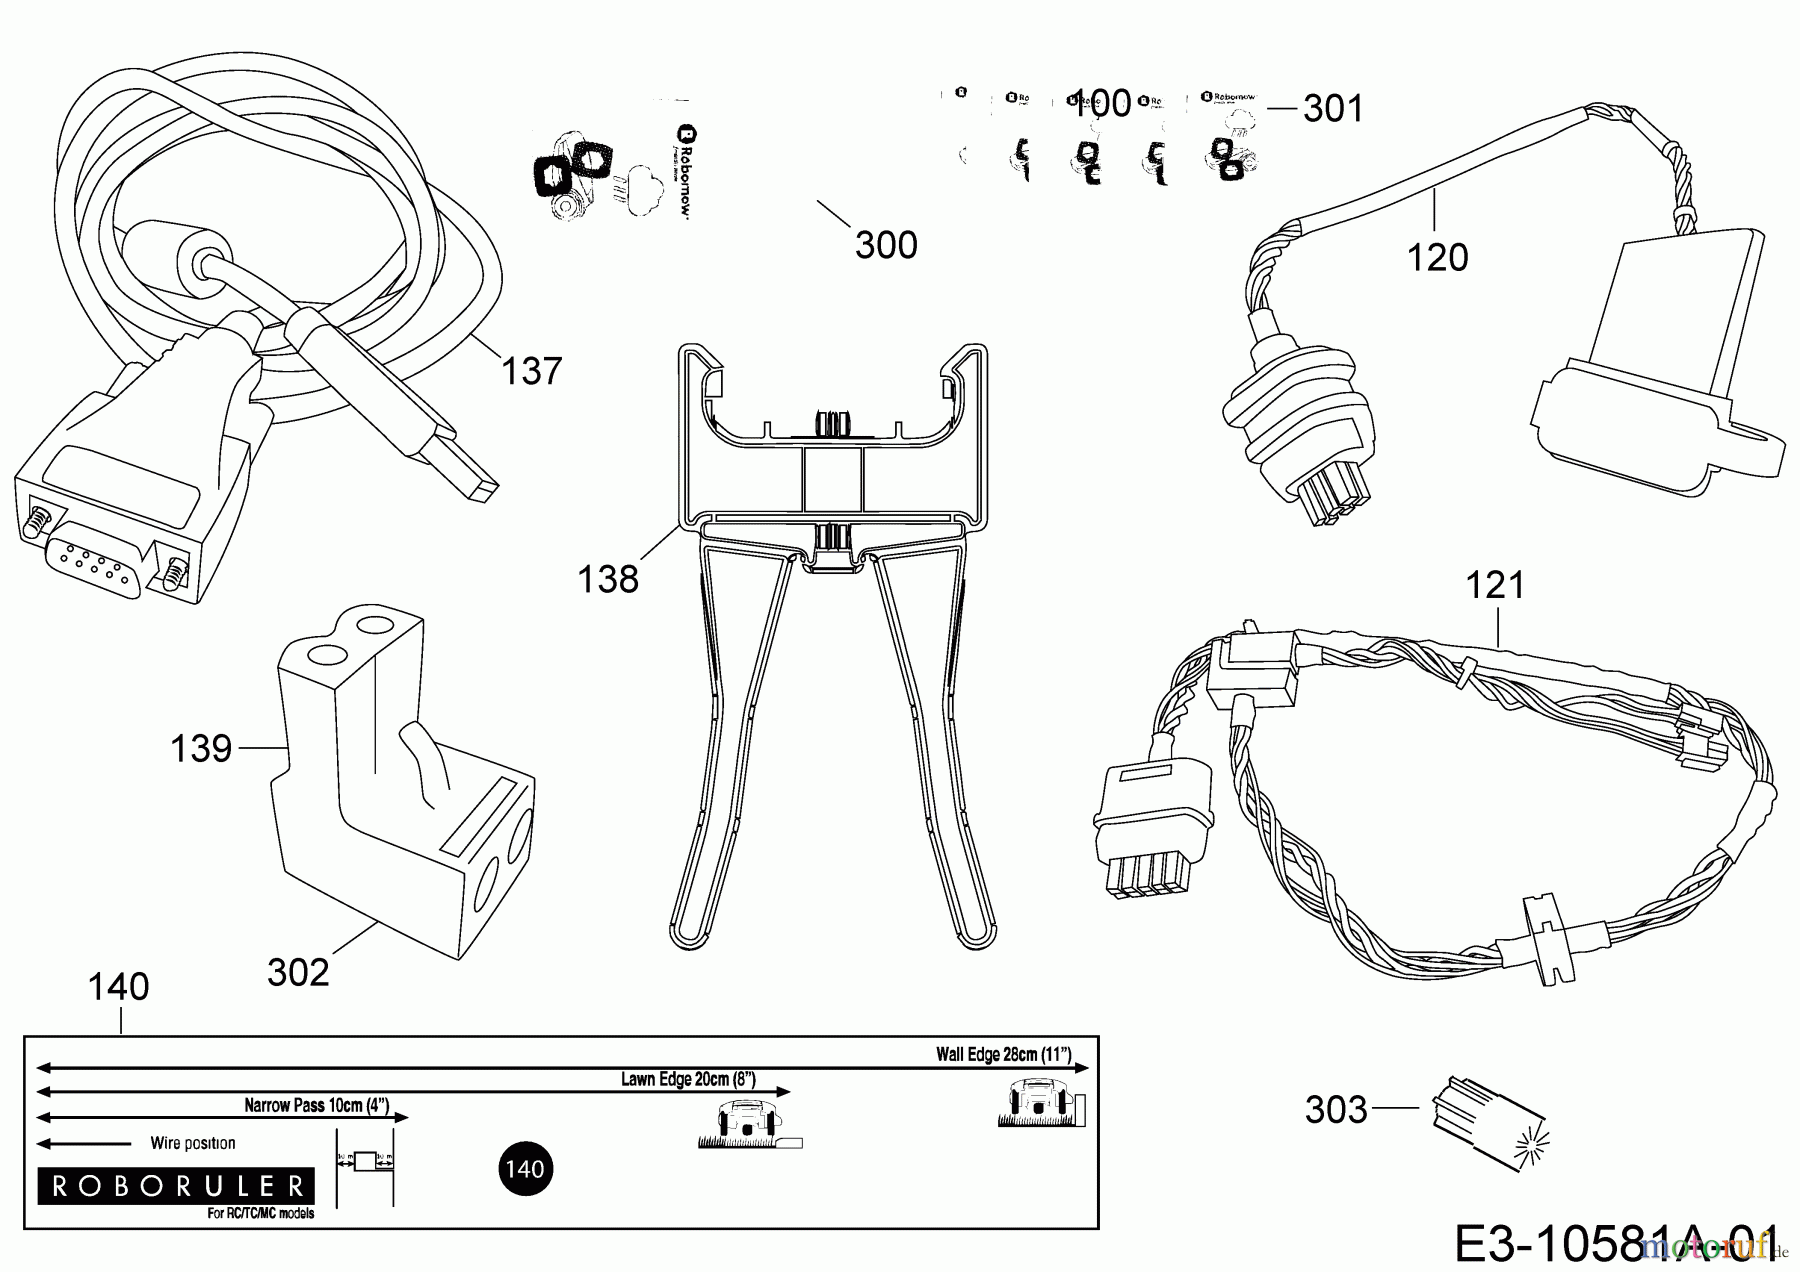  Robomow Mähroboter MC150 PRD7002Y  (2014) Kabel, Kabelanschluß, Regensensor, Werkzeug